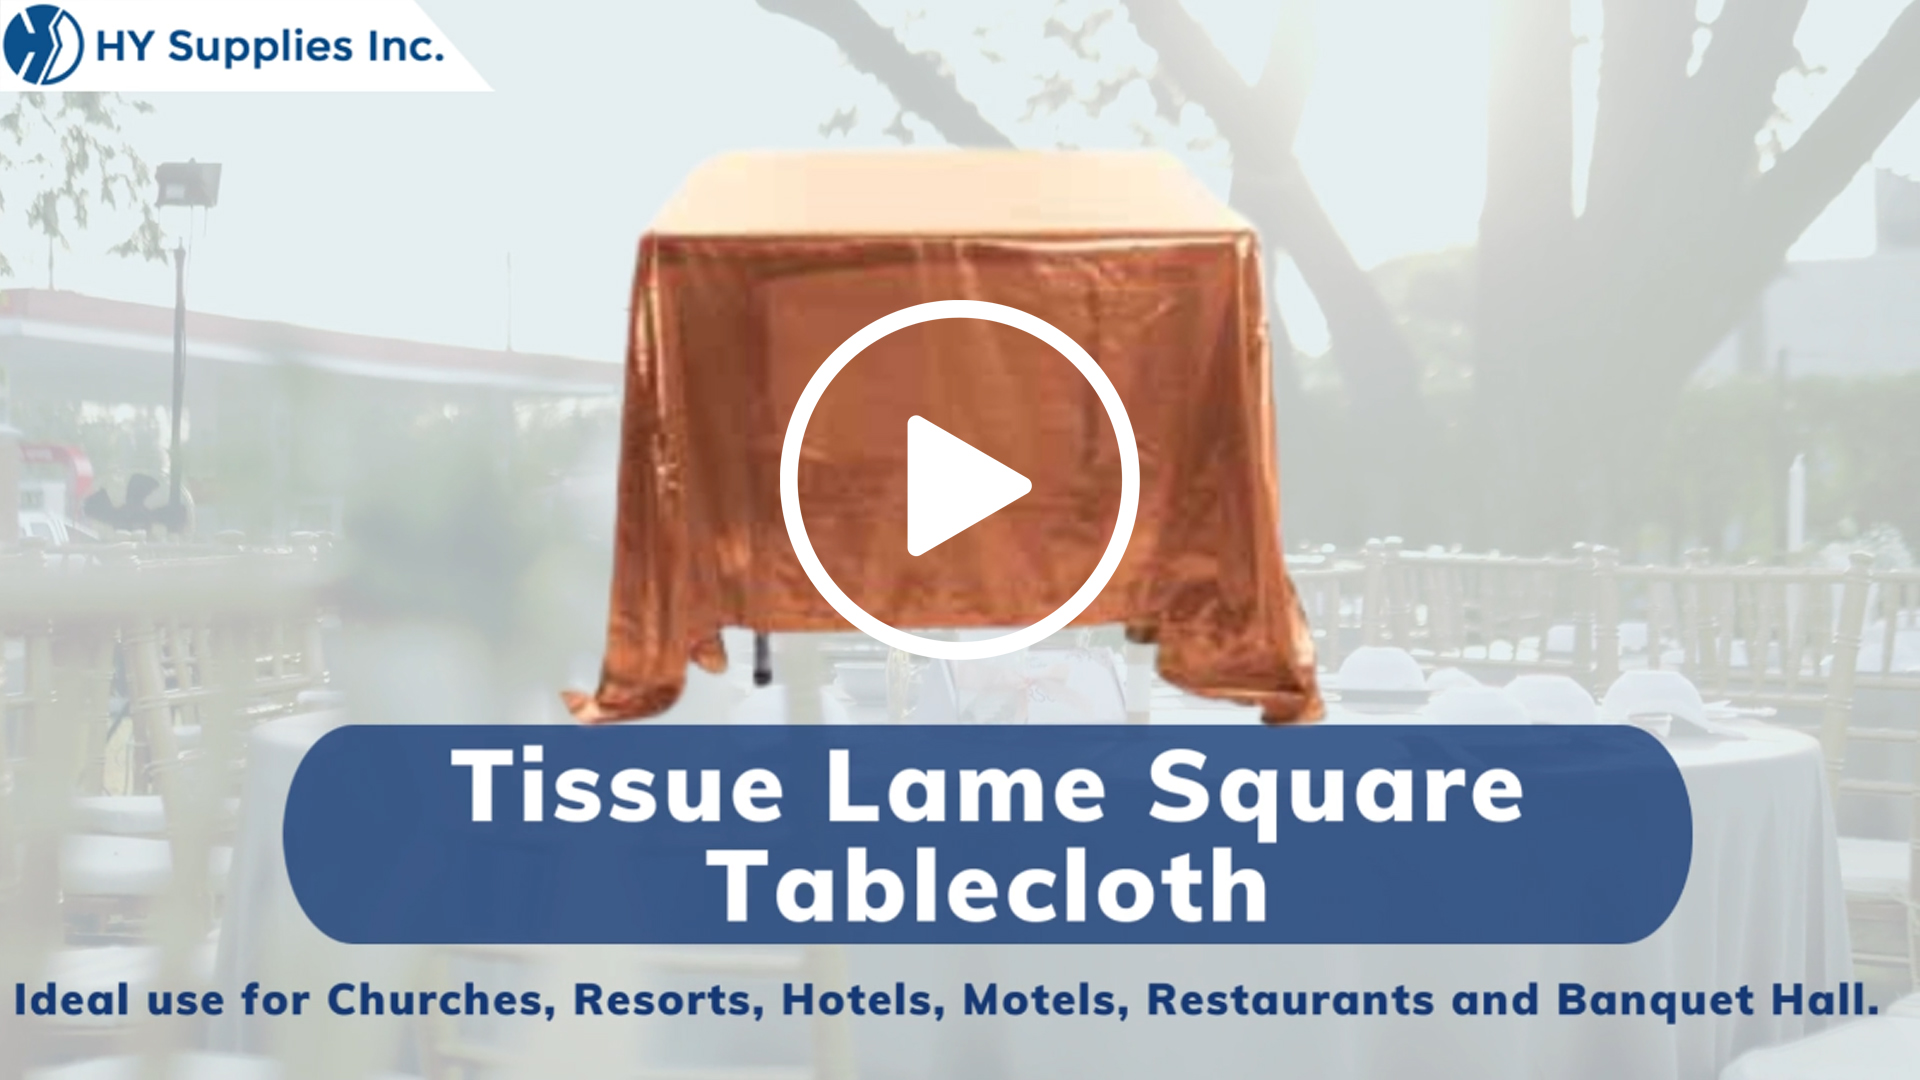 Tissue Lame Square Tablecloth